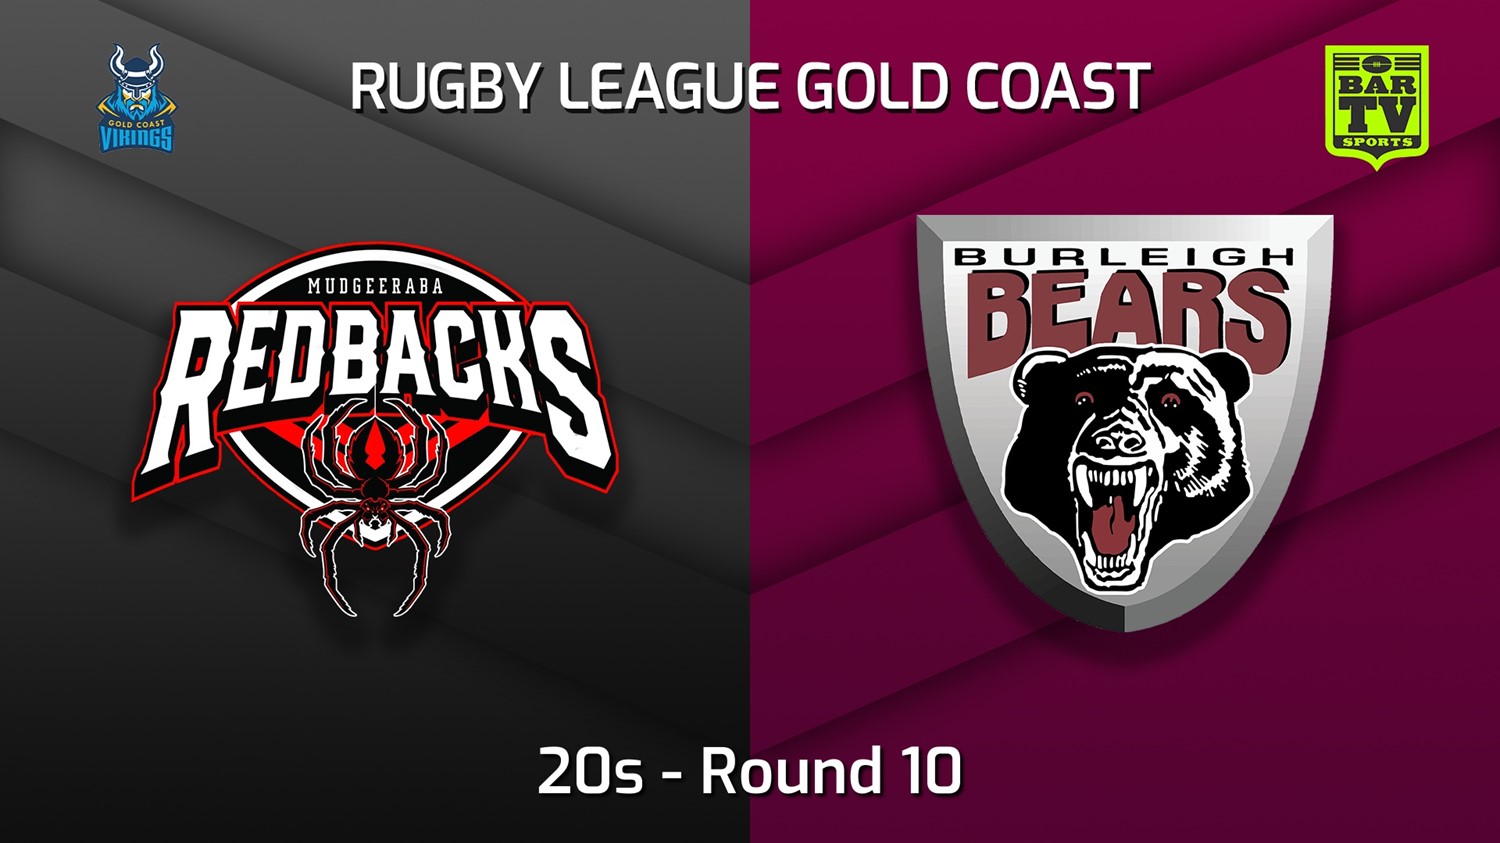 220612-Gold Coast Round 10 - 20s - Mudgeeraba Redbacks v Burleigh Bears Slate Image